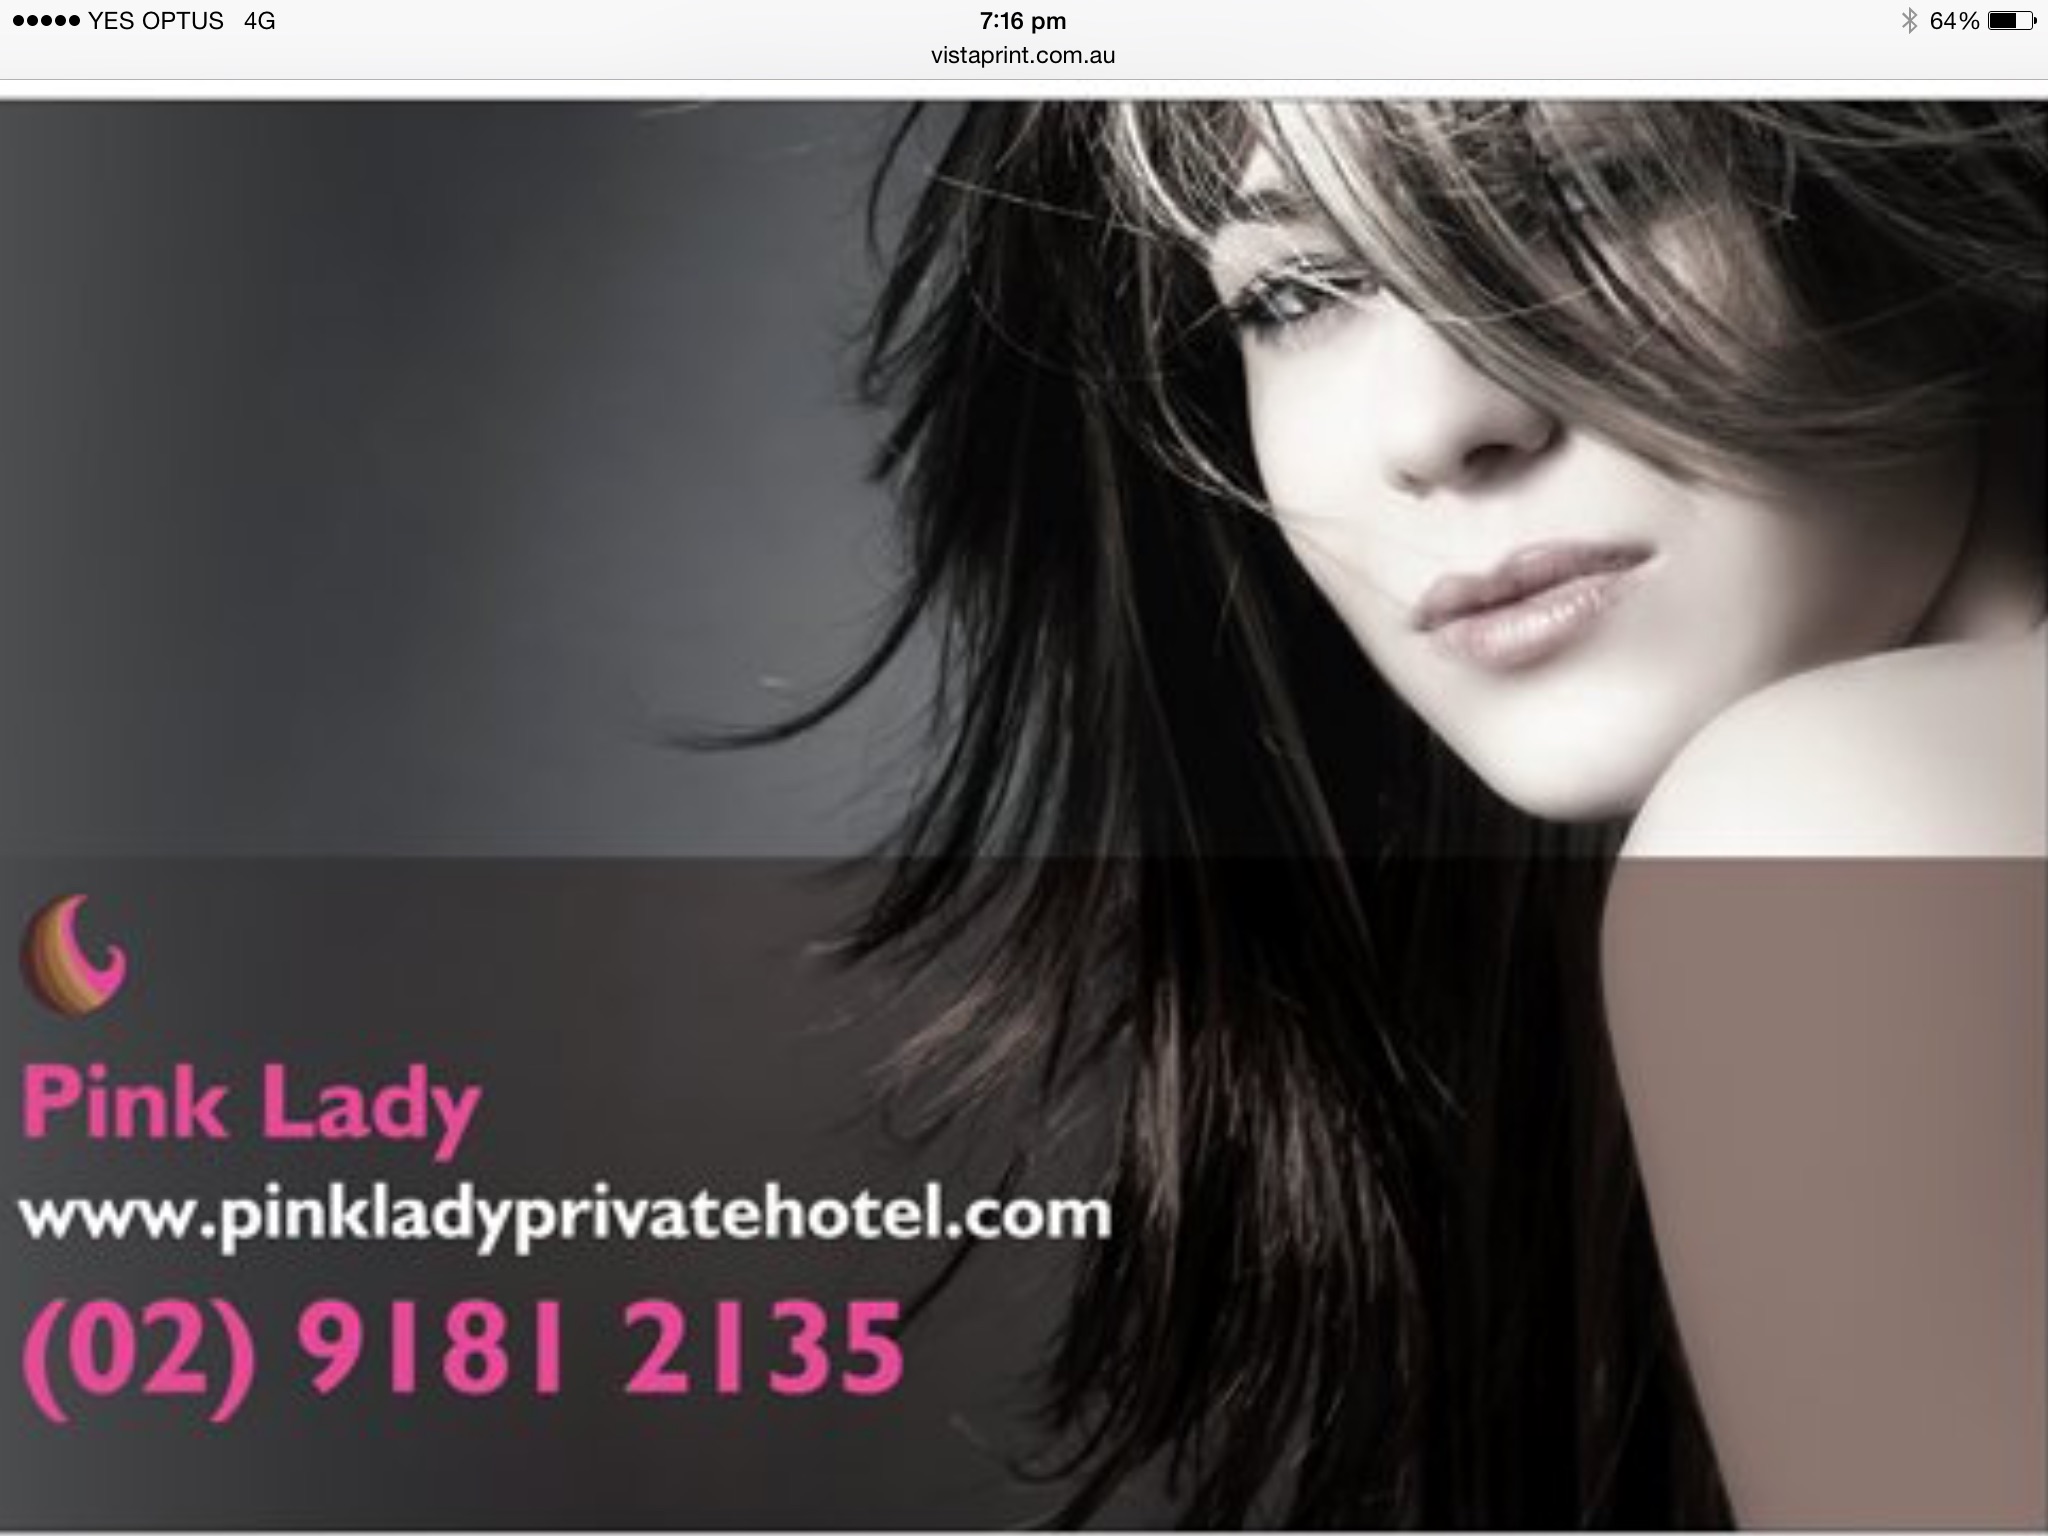 Pink Lady Private Hotel - Accommodation Australia